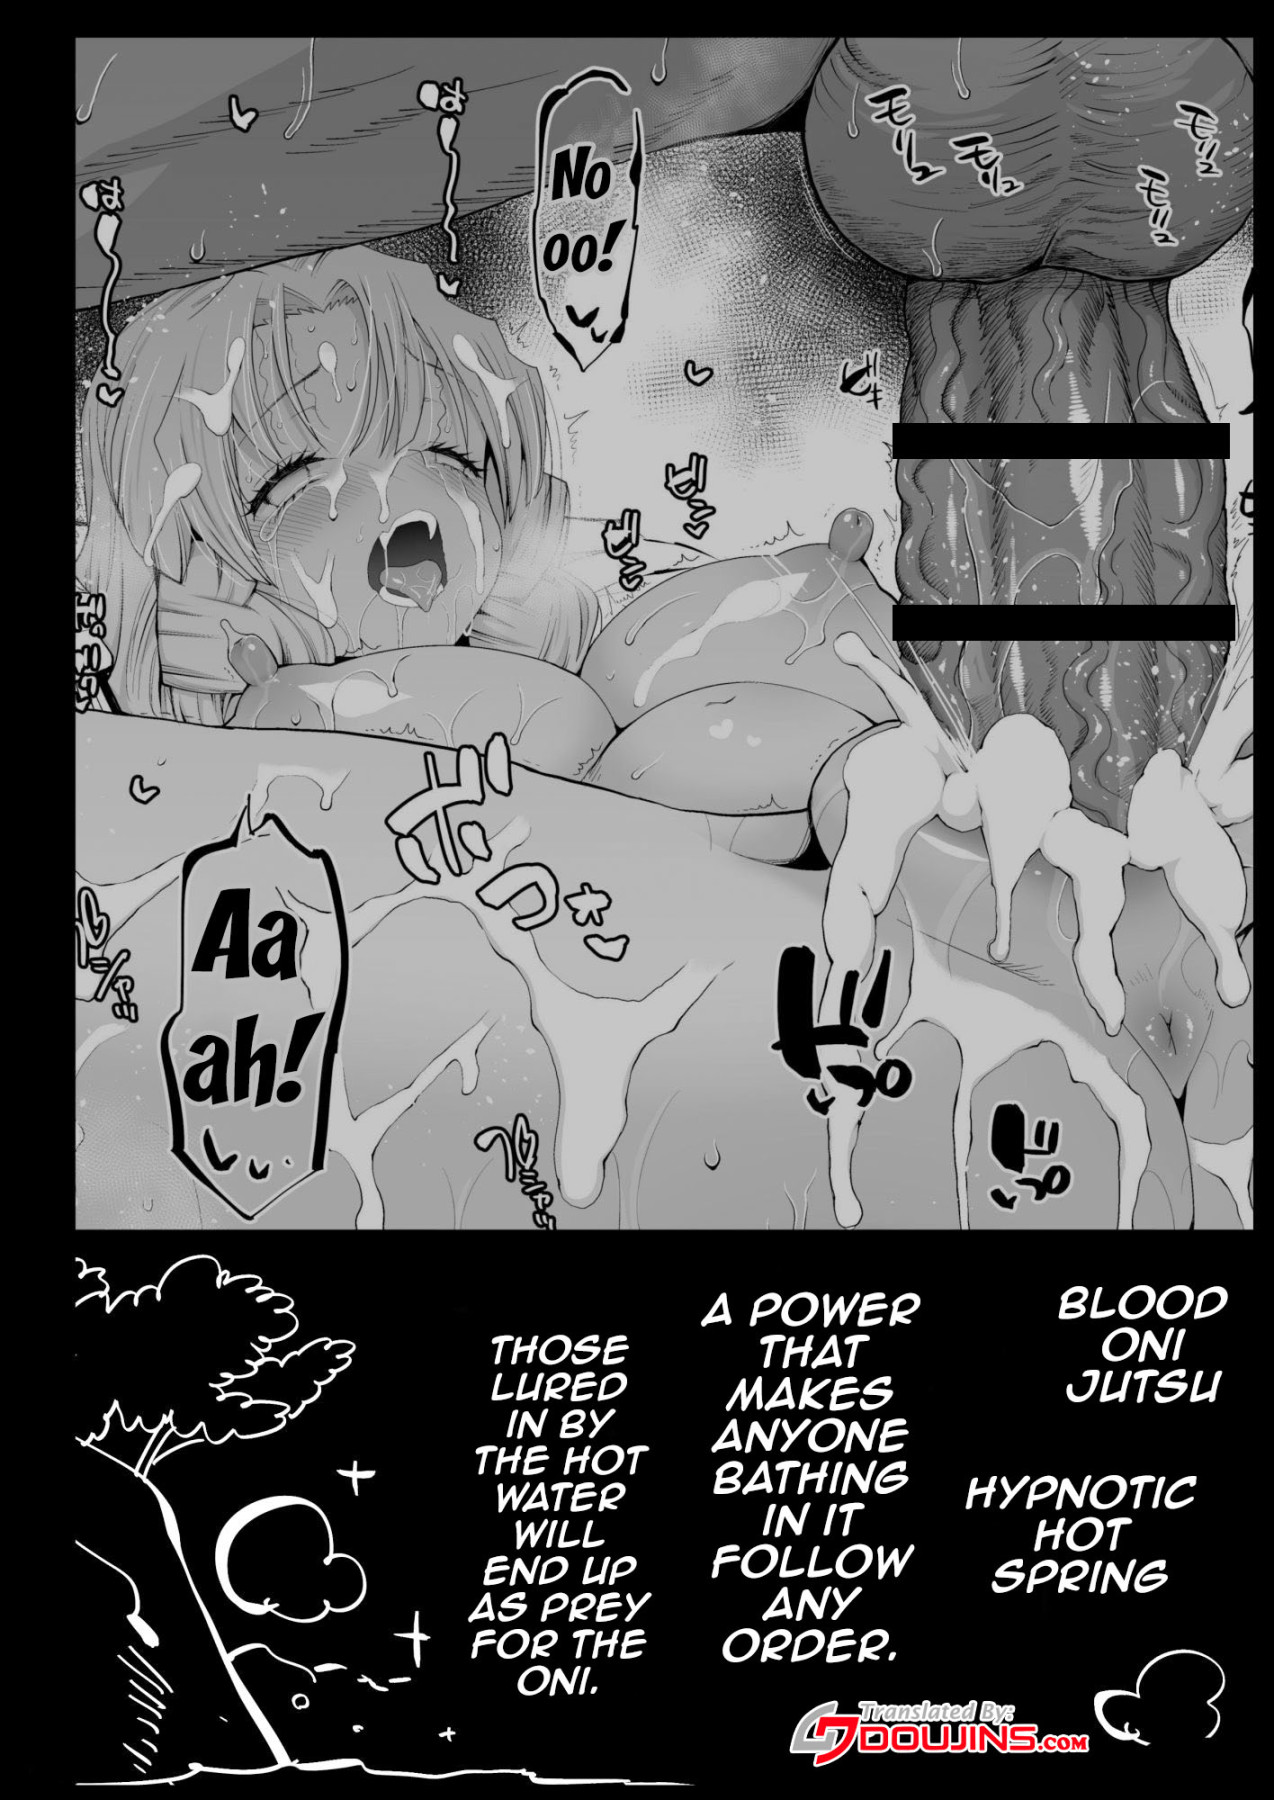 Hentai Manga Comic-Hot Spring Hypnotic Kanroji Mitsuri Pregnancy-Read-2